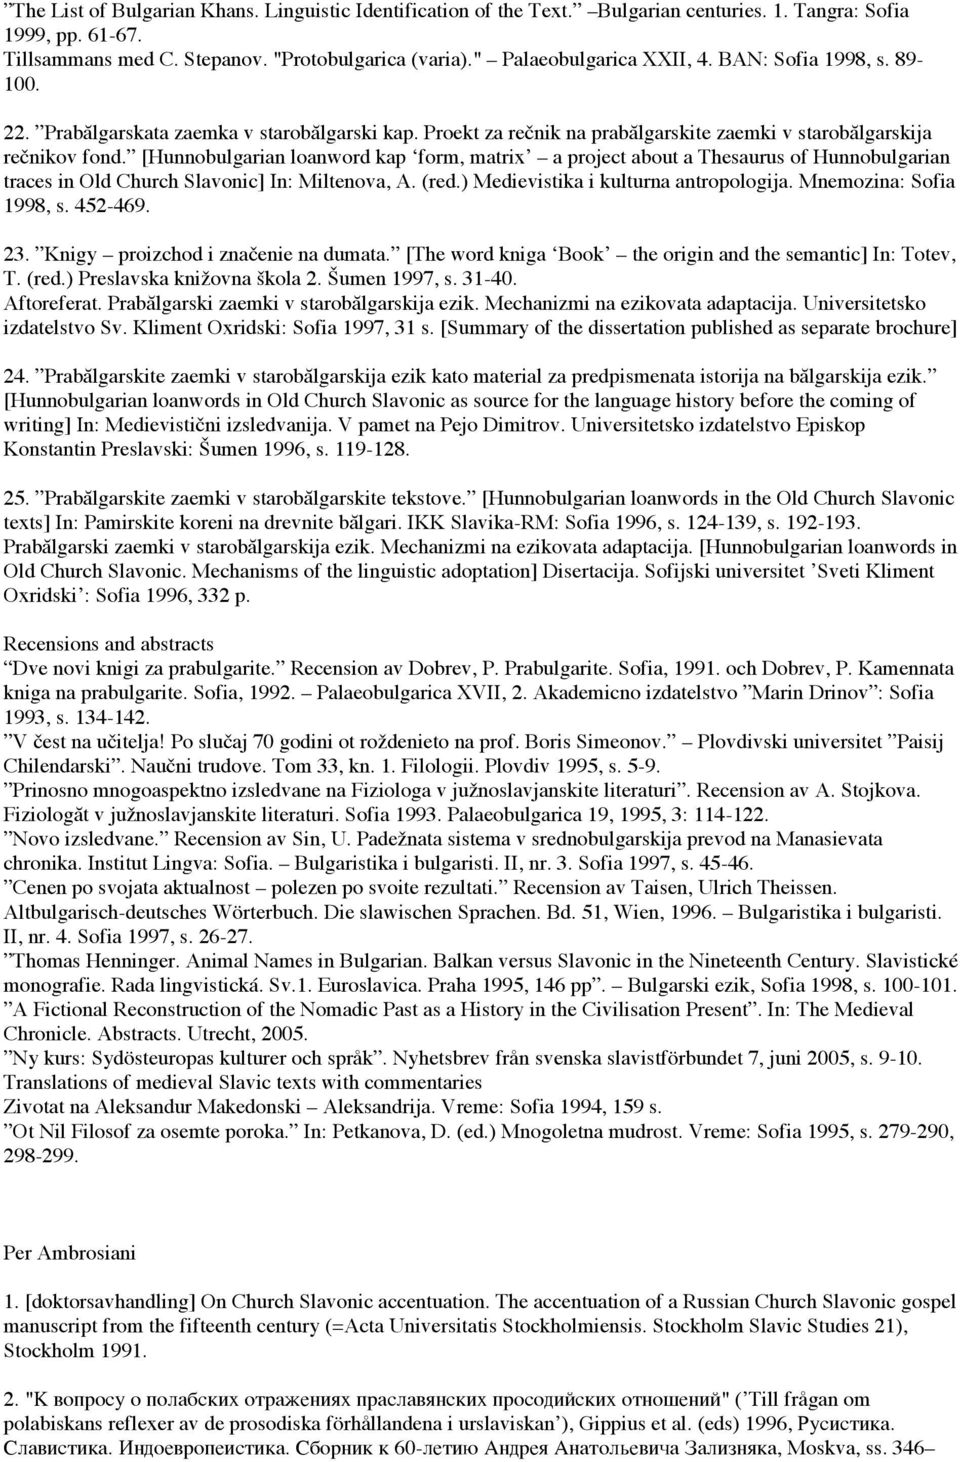 [Hunnobulgarian loanword kap form, matrix a project about a Thesaurus of Hunnobulgarian traces in Old Church Slavonic] In: Miltenova, A. (red.) Medievistika i kulturna antropologija.